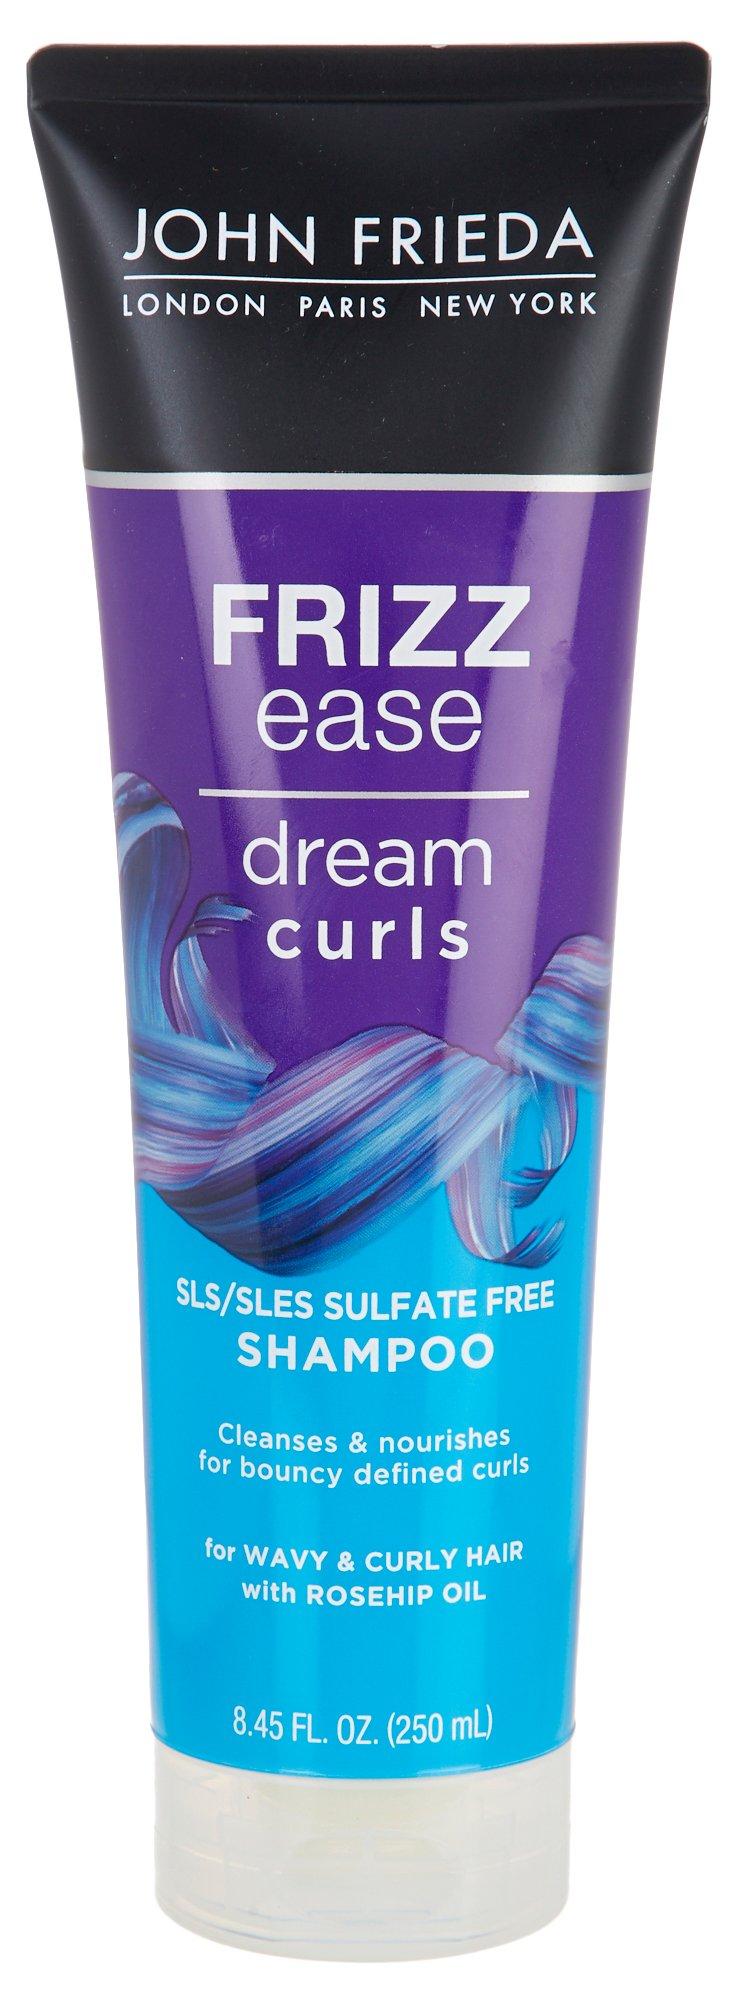 8 oz Dream Curls Sulfate Free Shampoo